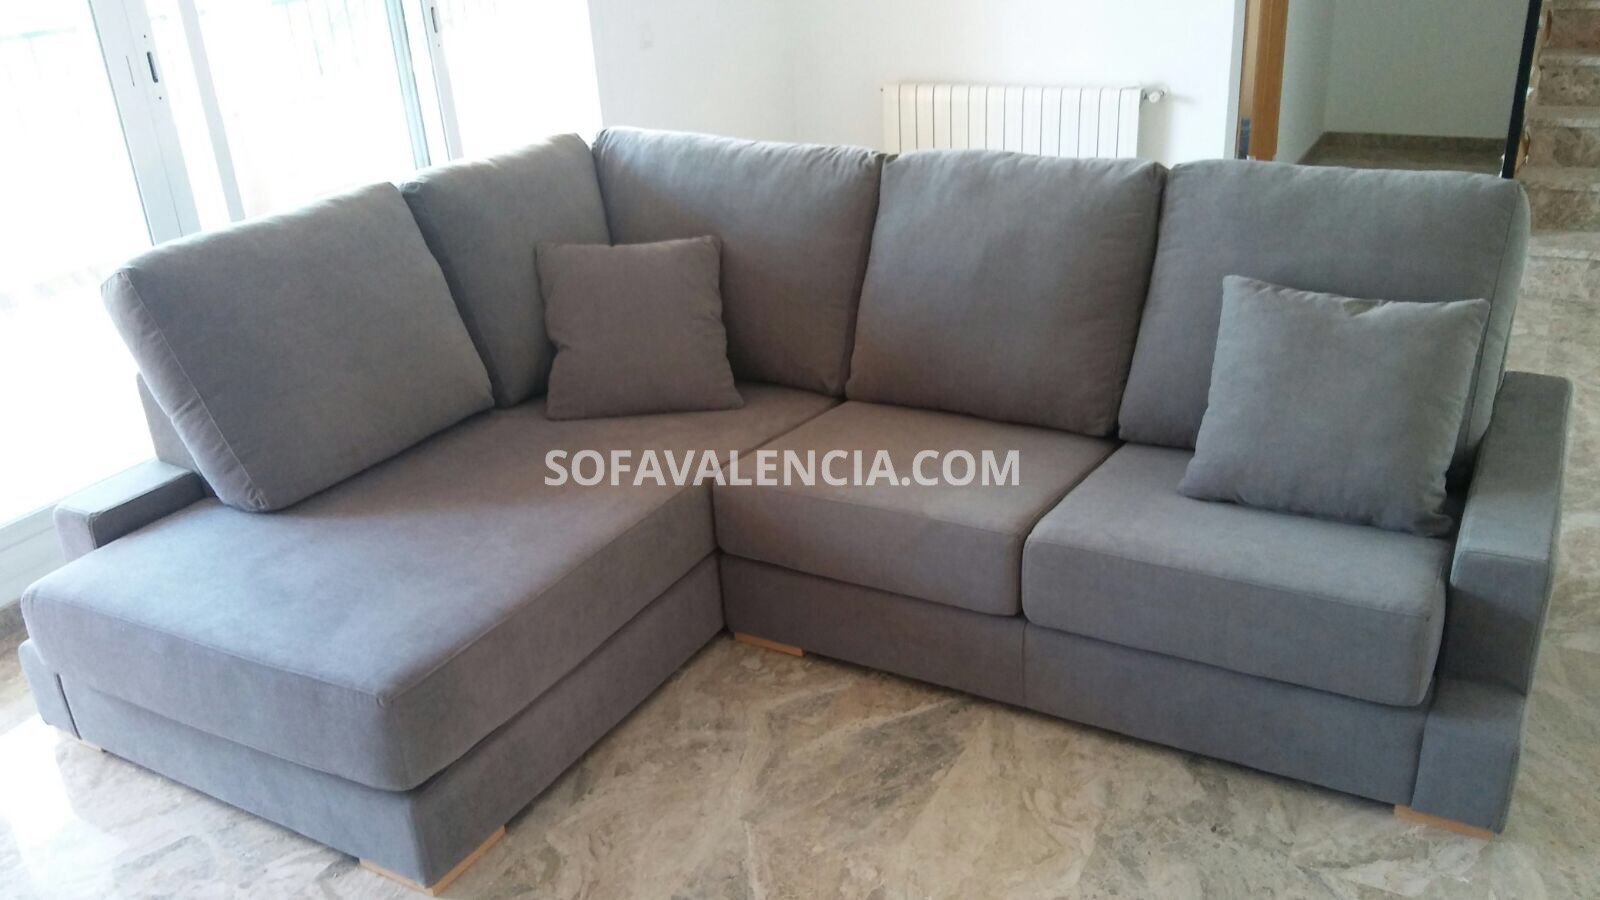 sofa-valencia-fotos-clientes-75